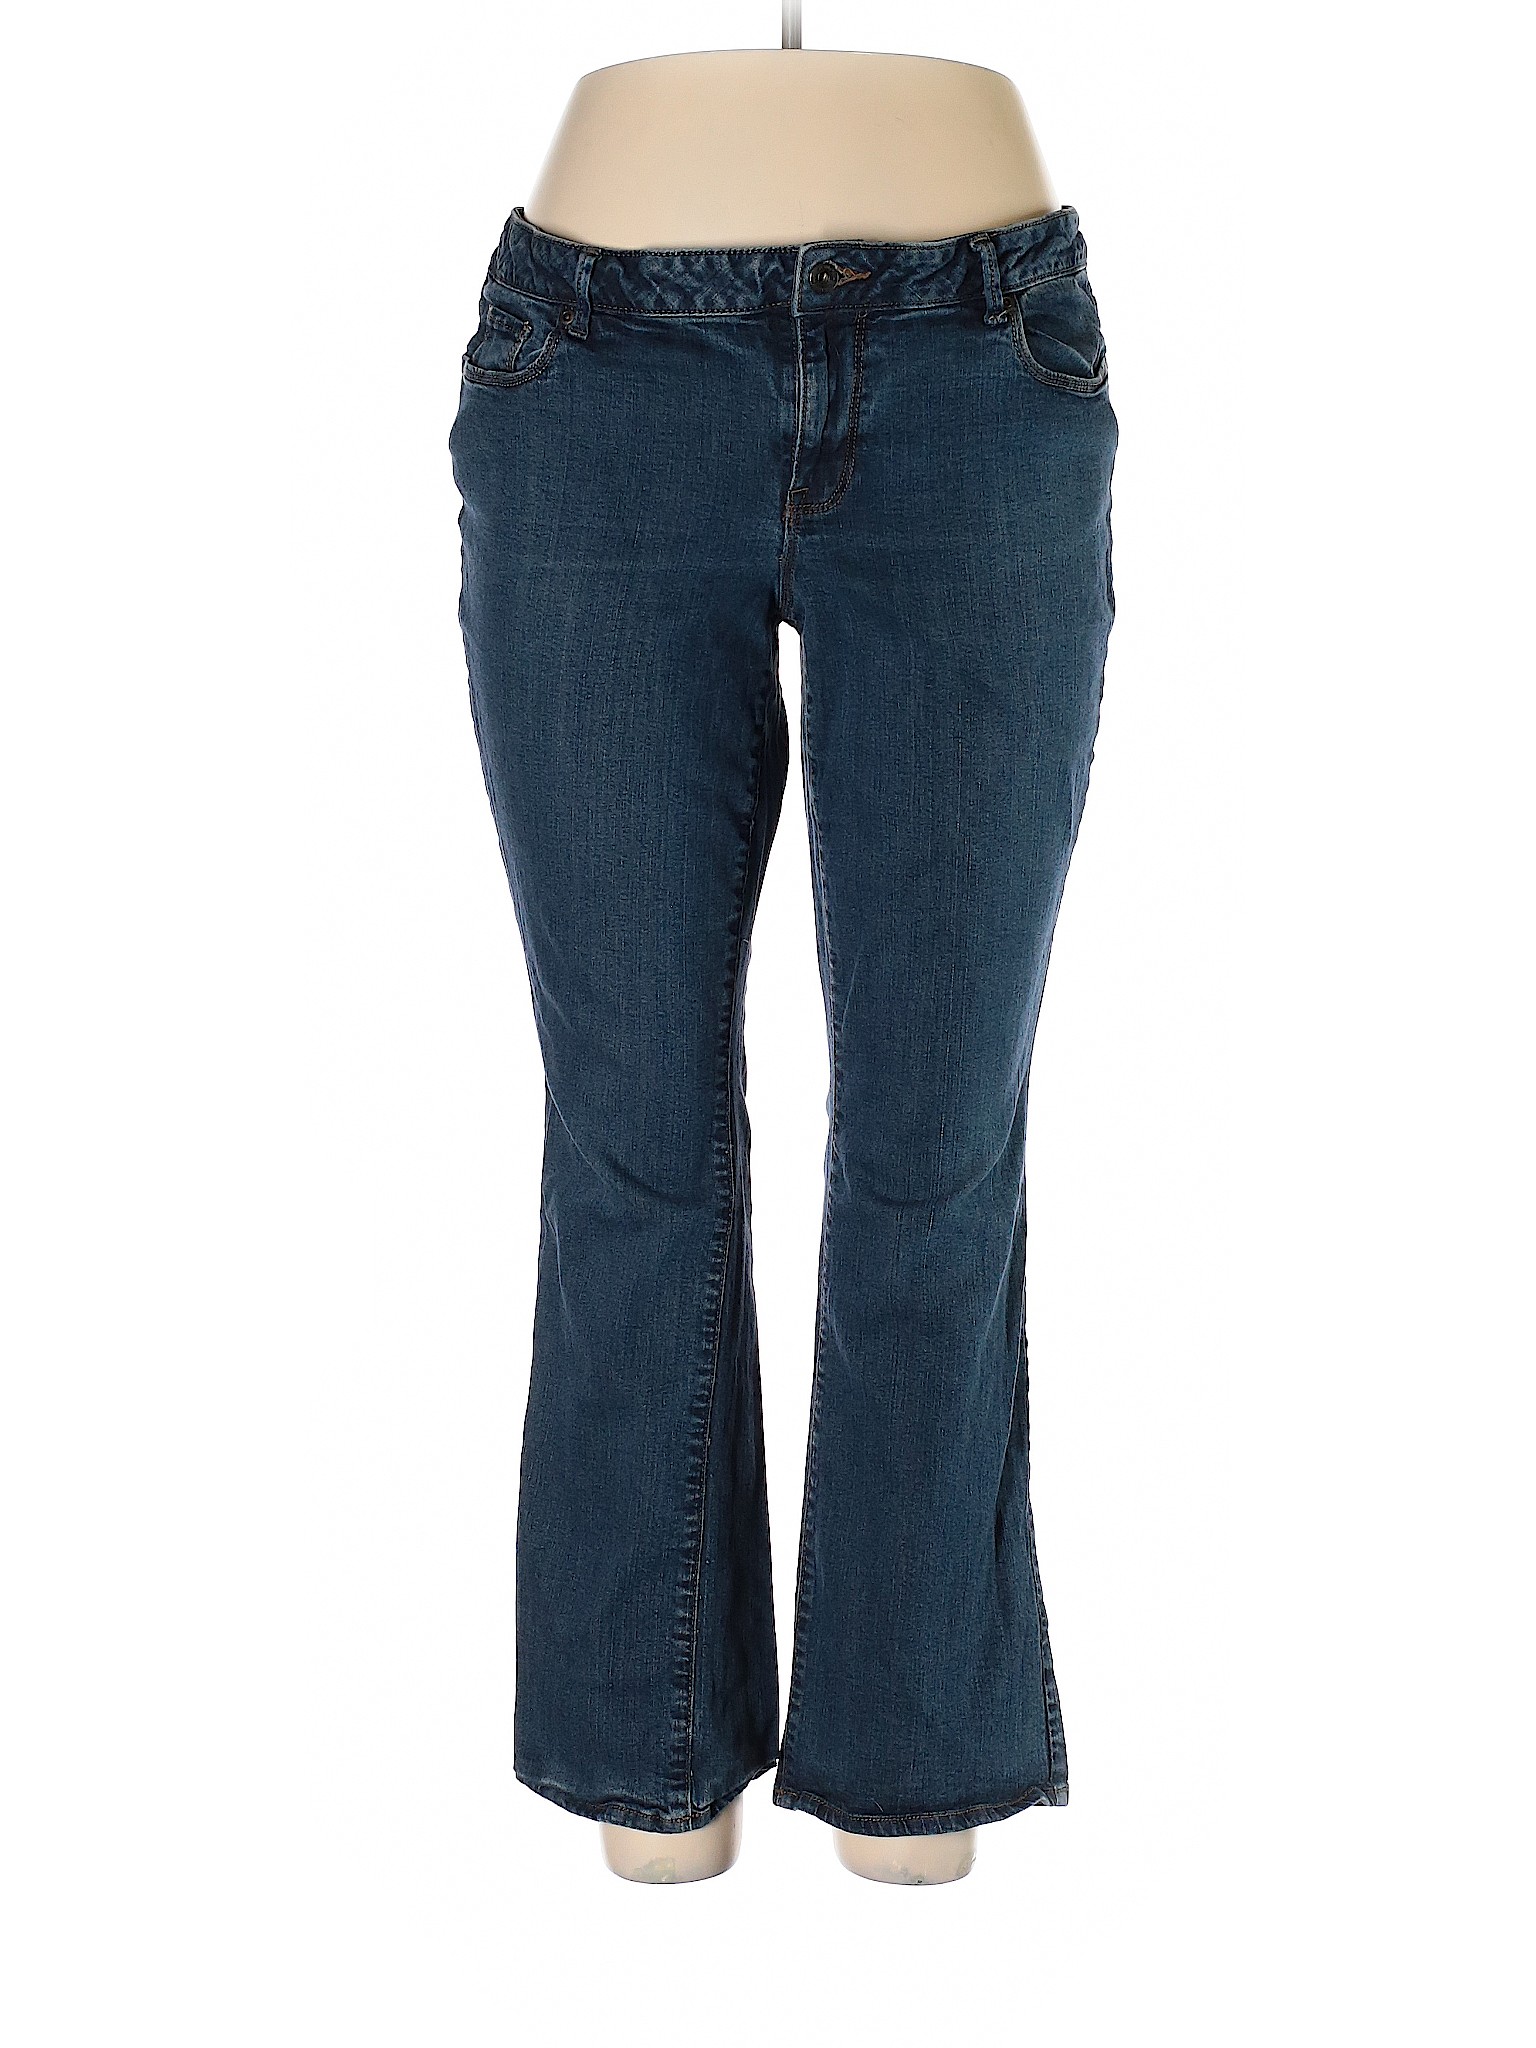 SONOMA life + style Women Blue Jeans 16 | eBay